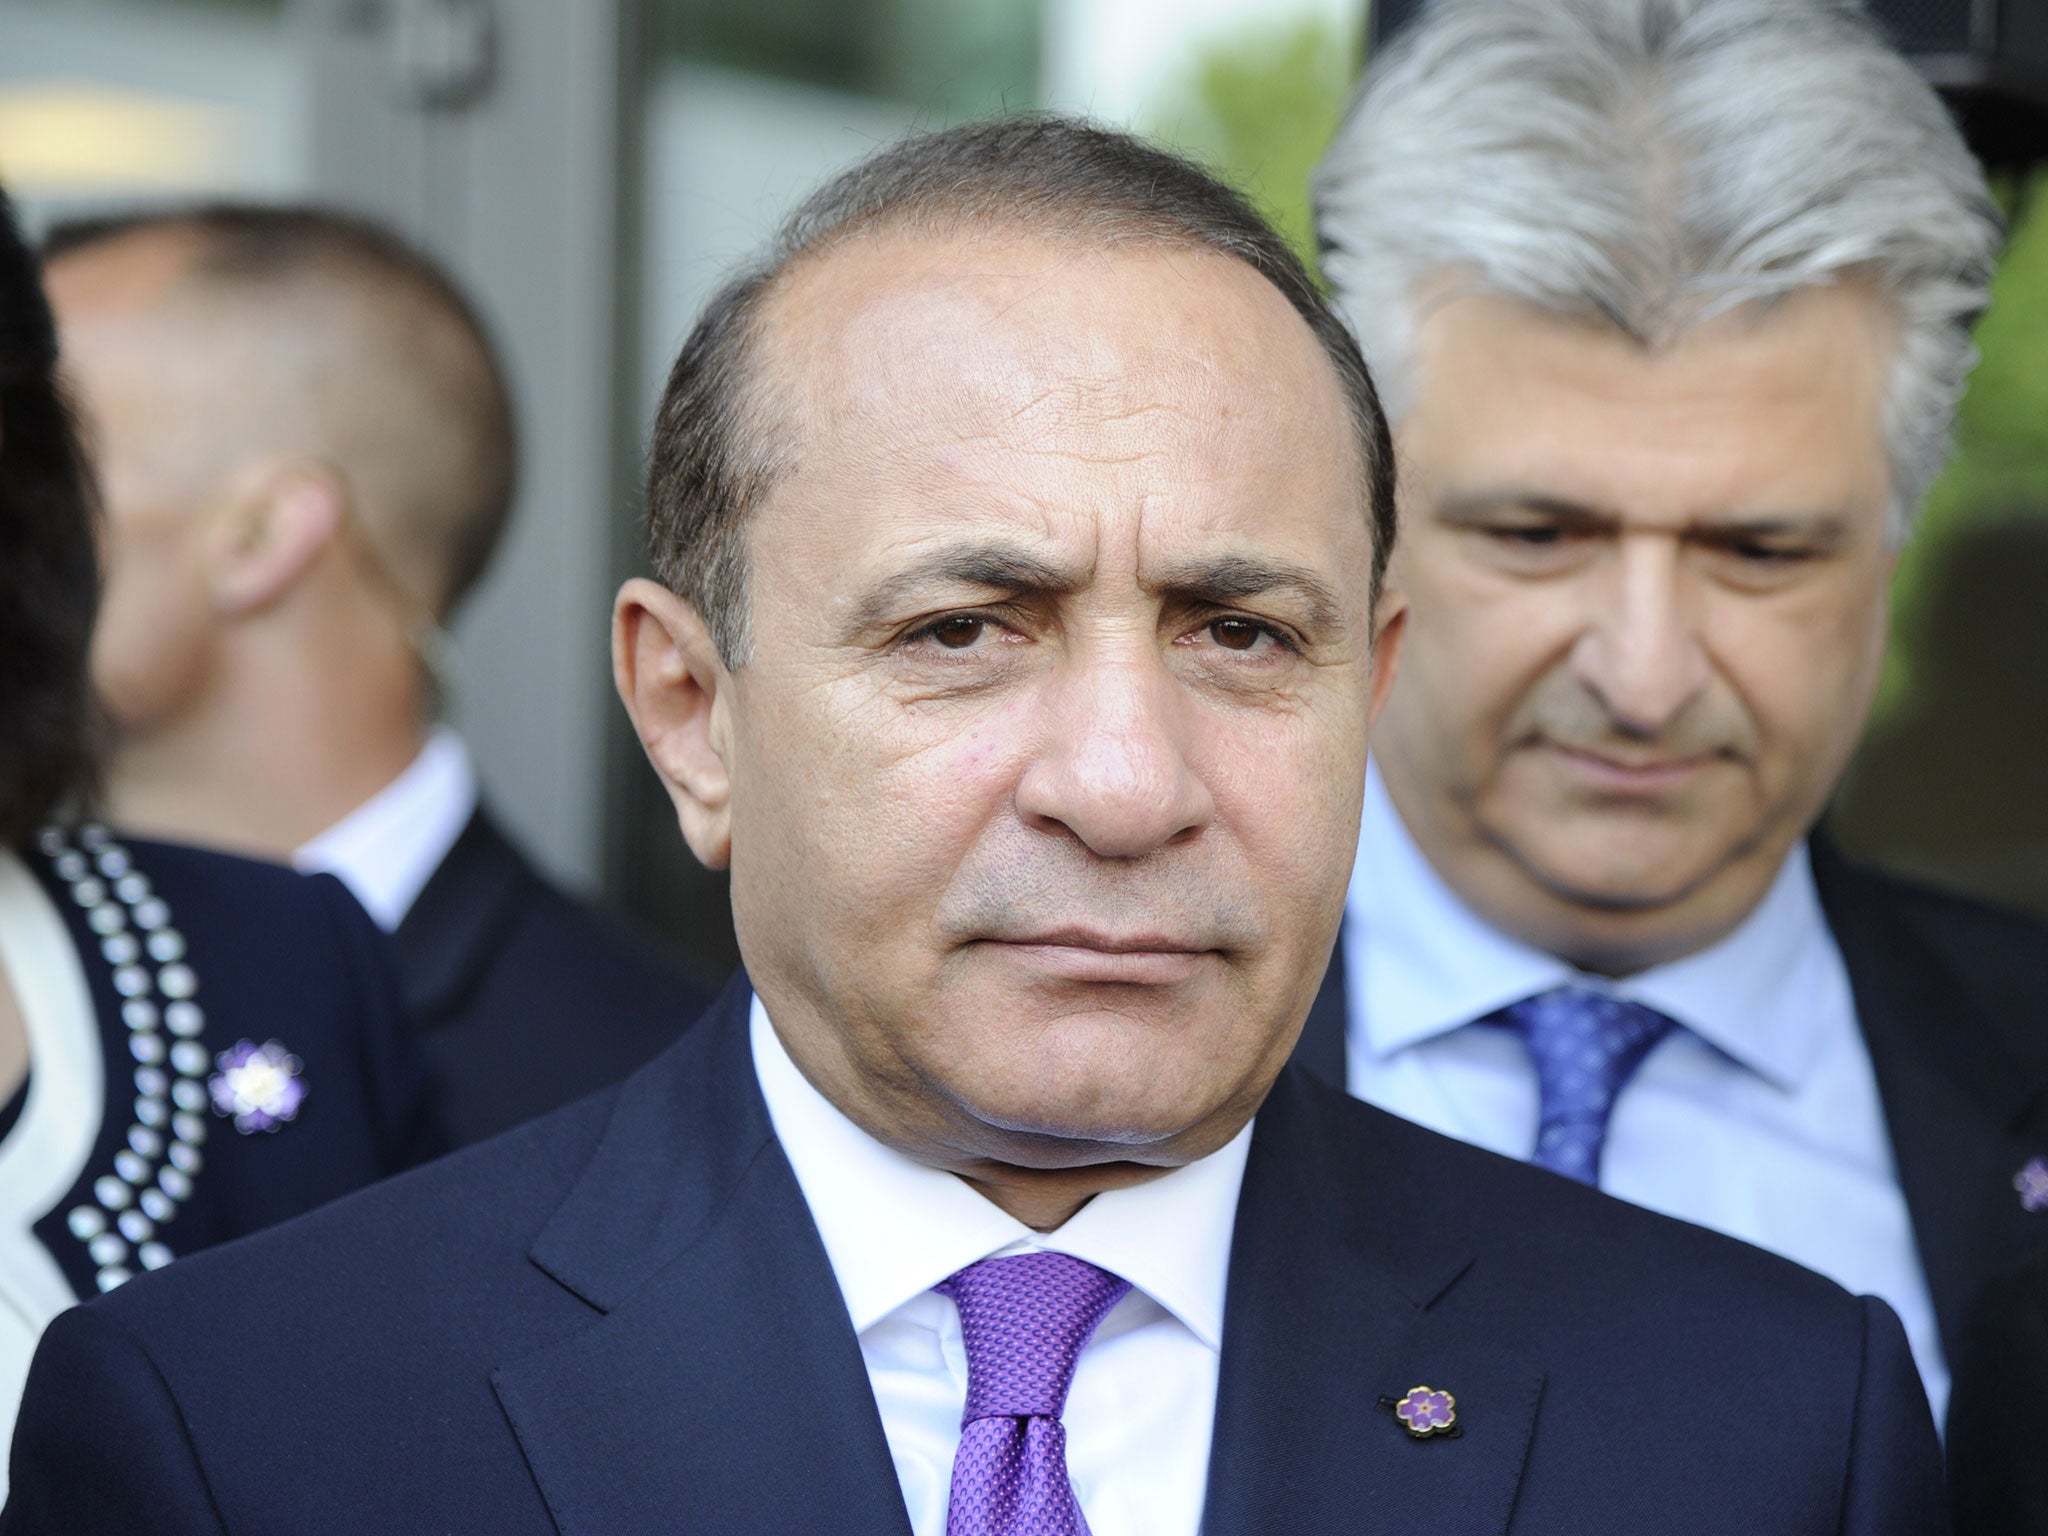 Hovik Abrahamyan, the Prime Minister of Armenia, announced his resignation on 8 September